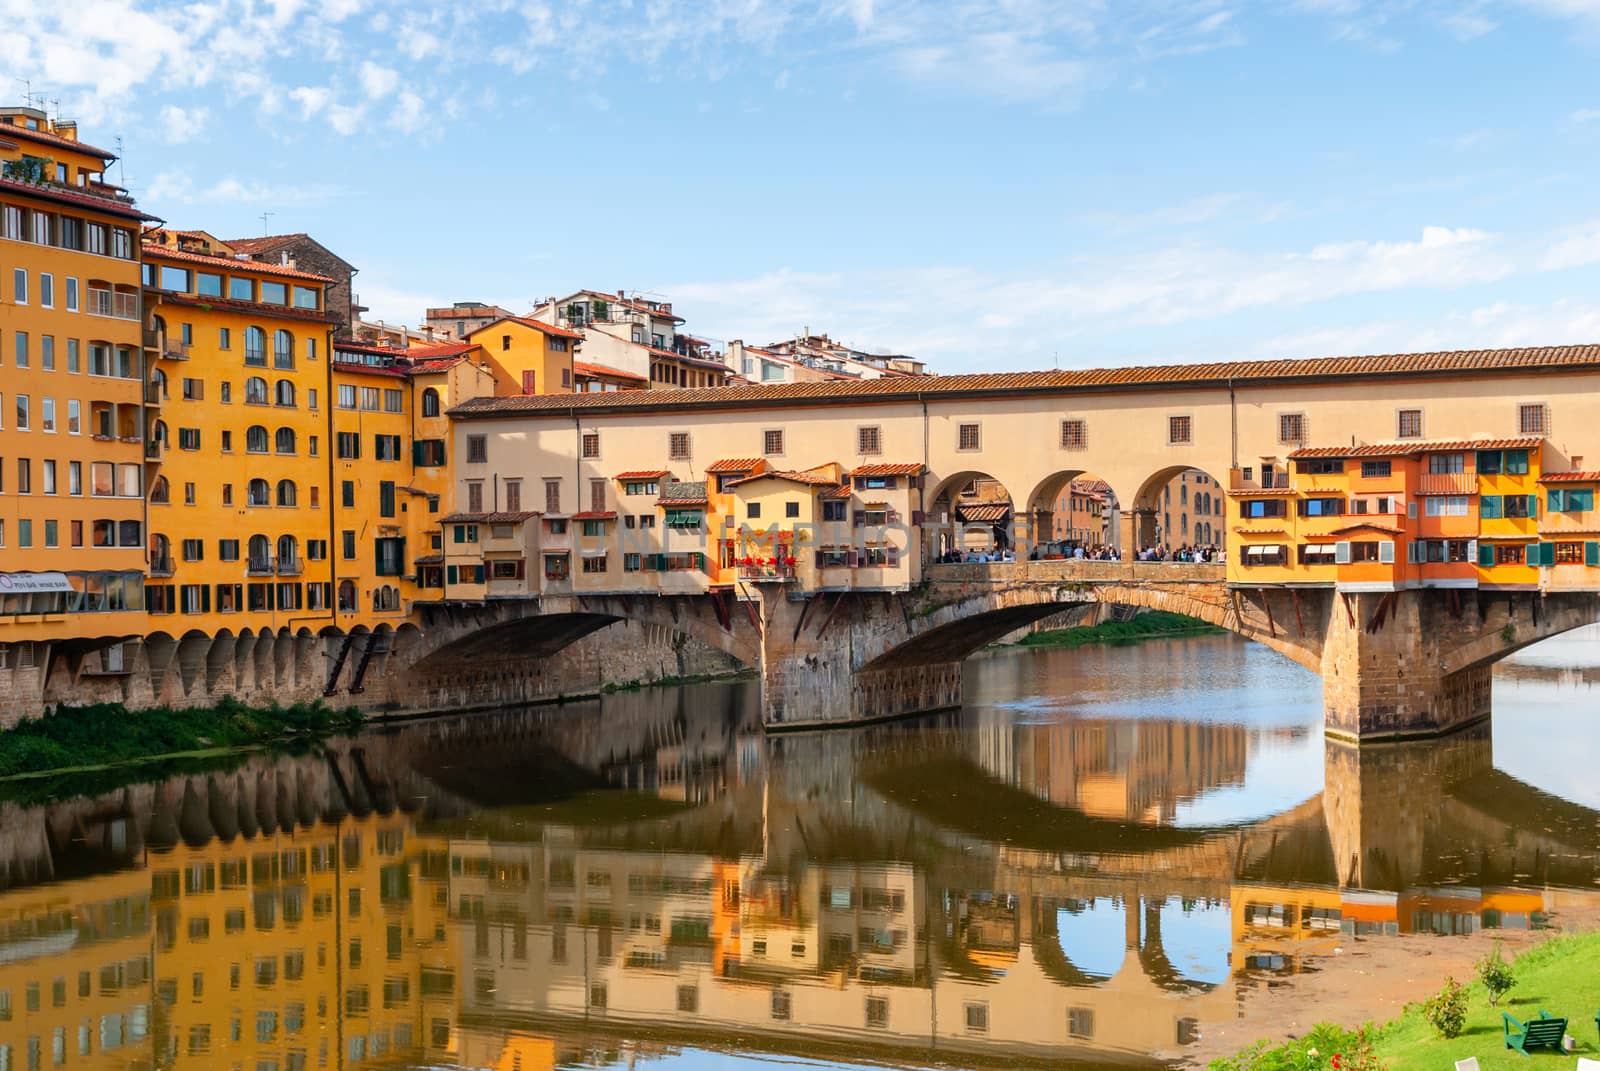 View of the Ponte Vecchio bridge in Florence. Italy